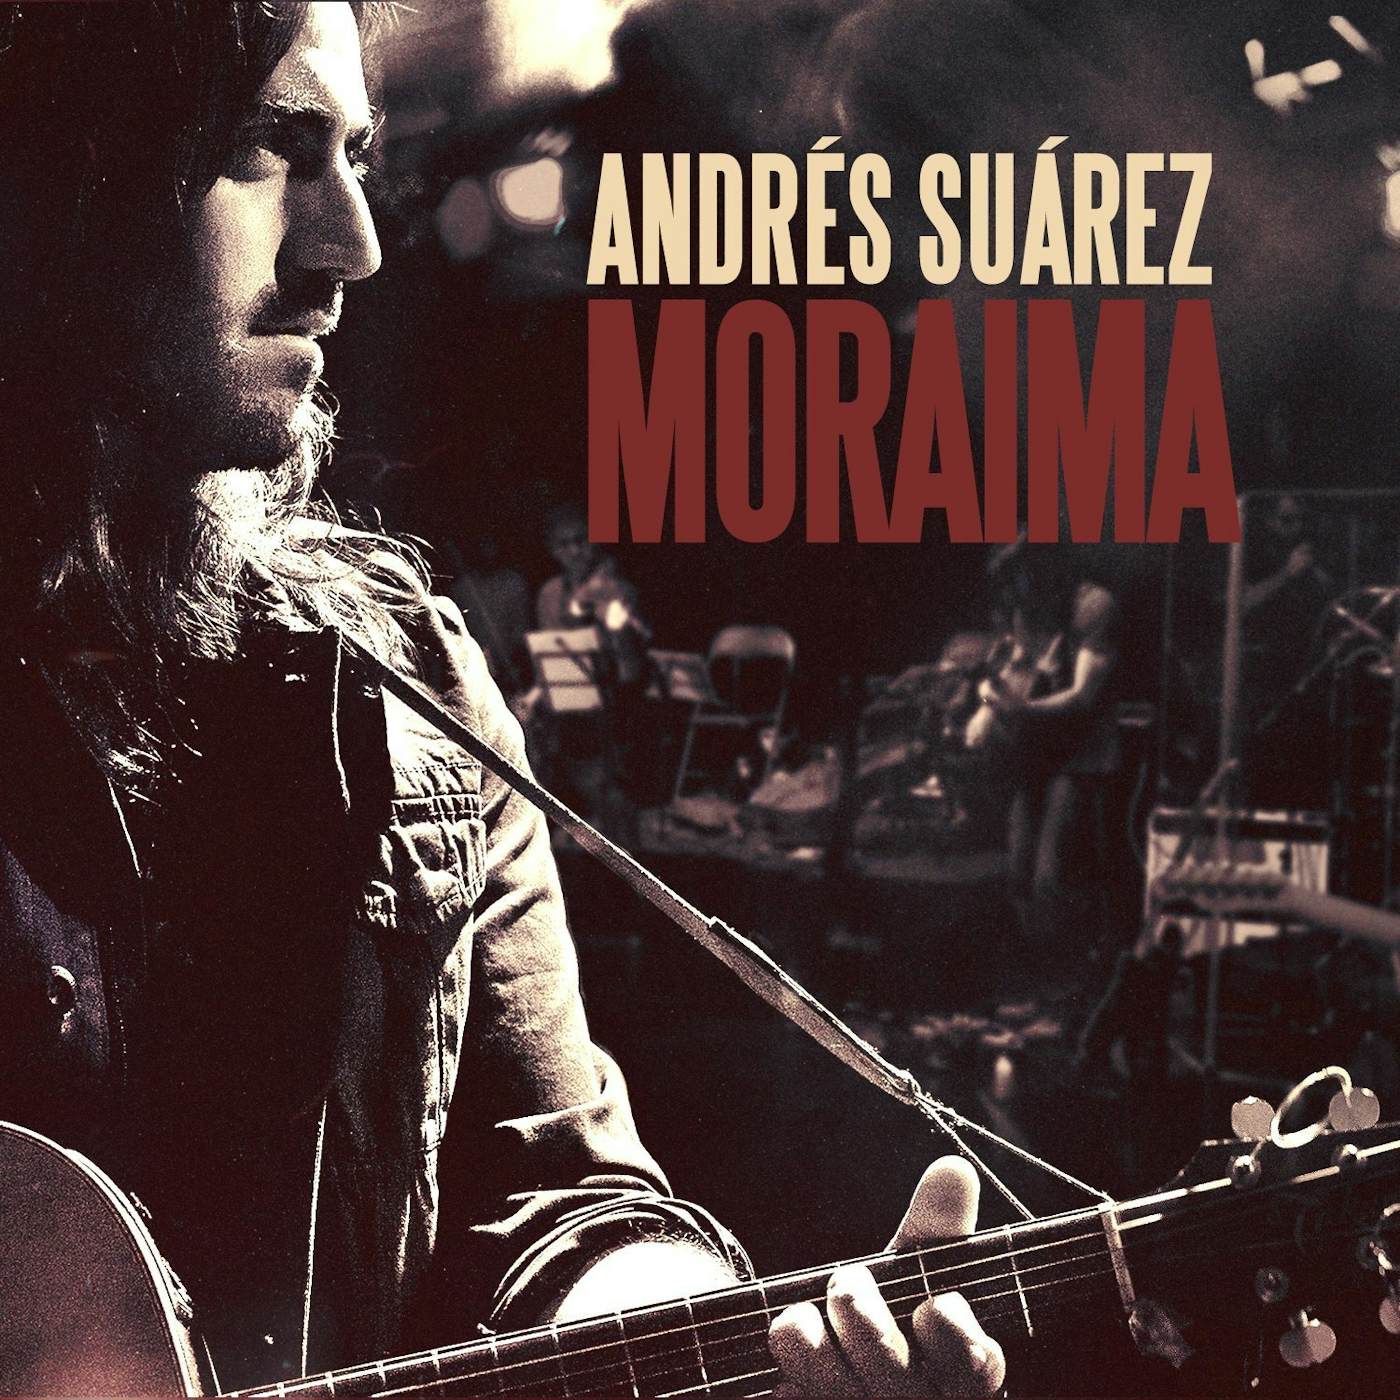 Andres Suarez Moraima Vinyl Record